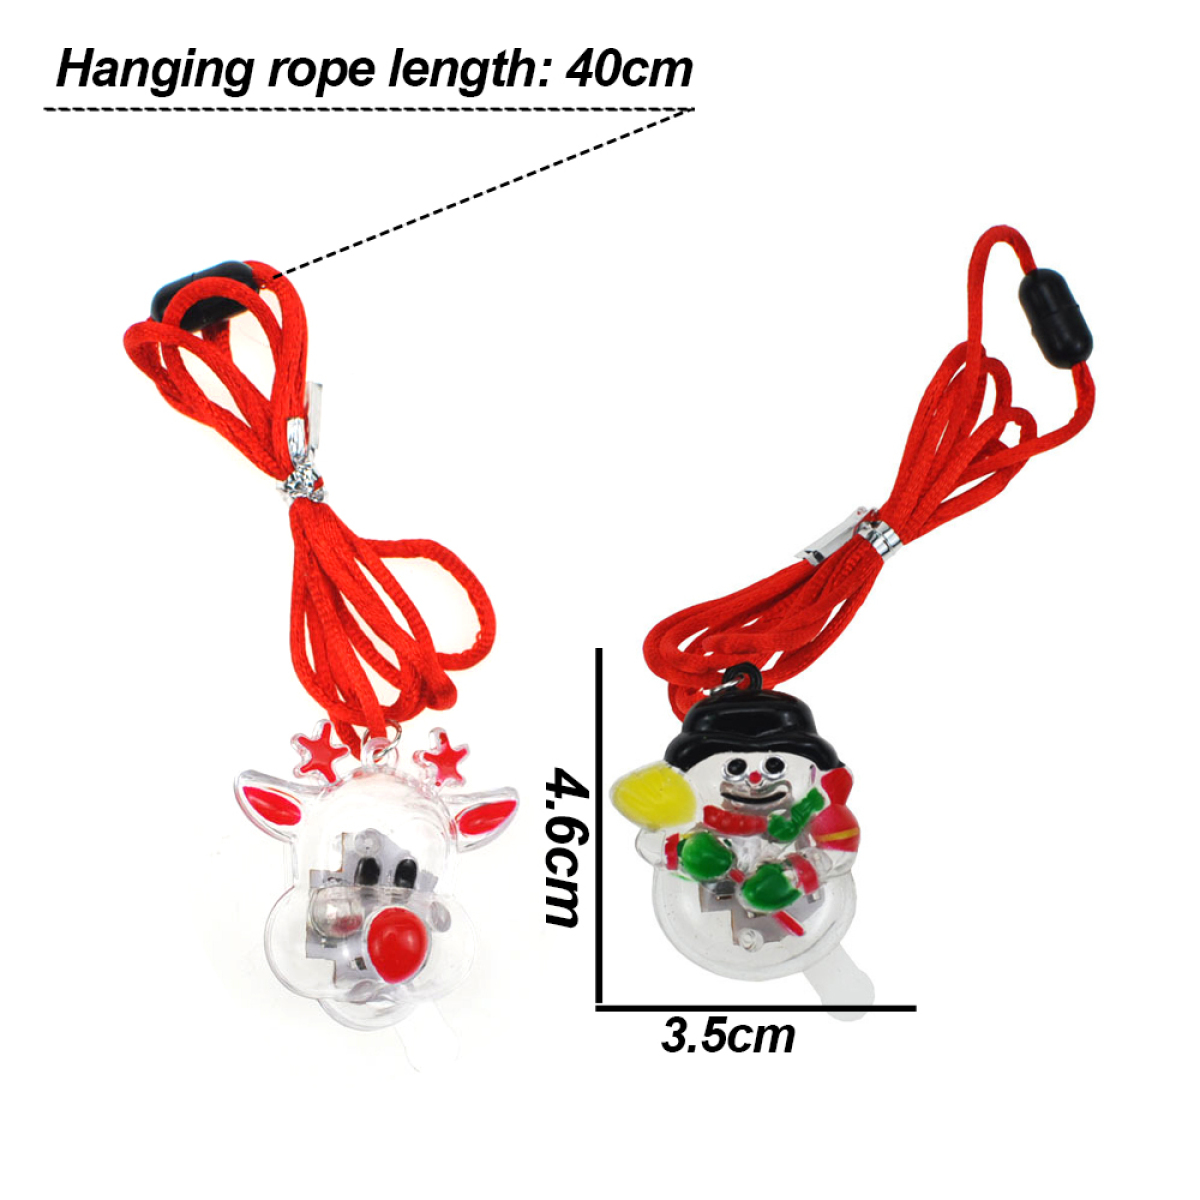 COZEVDNT Light-Up Christmas Bulb for Xmas Mehrfarbig Accessories - Festive Weihnachtsdeko, Parties Necklaces